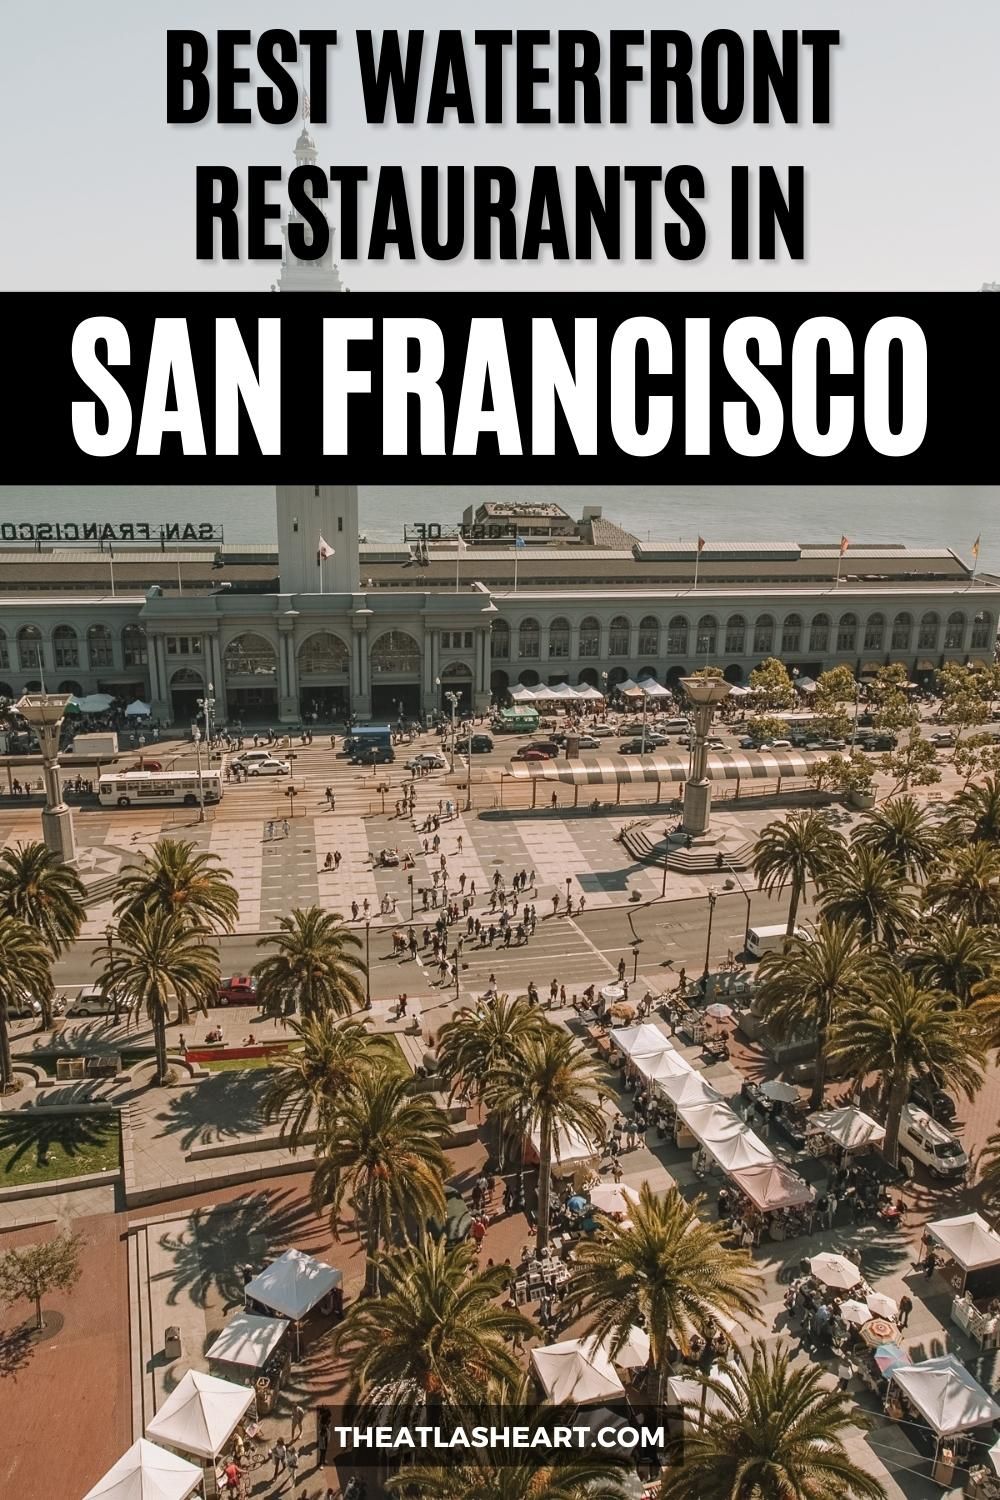 17 Best Waterfront Restaurants in San Francisco With Stunning Views